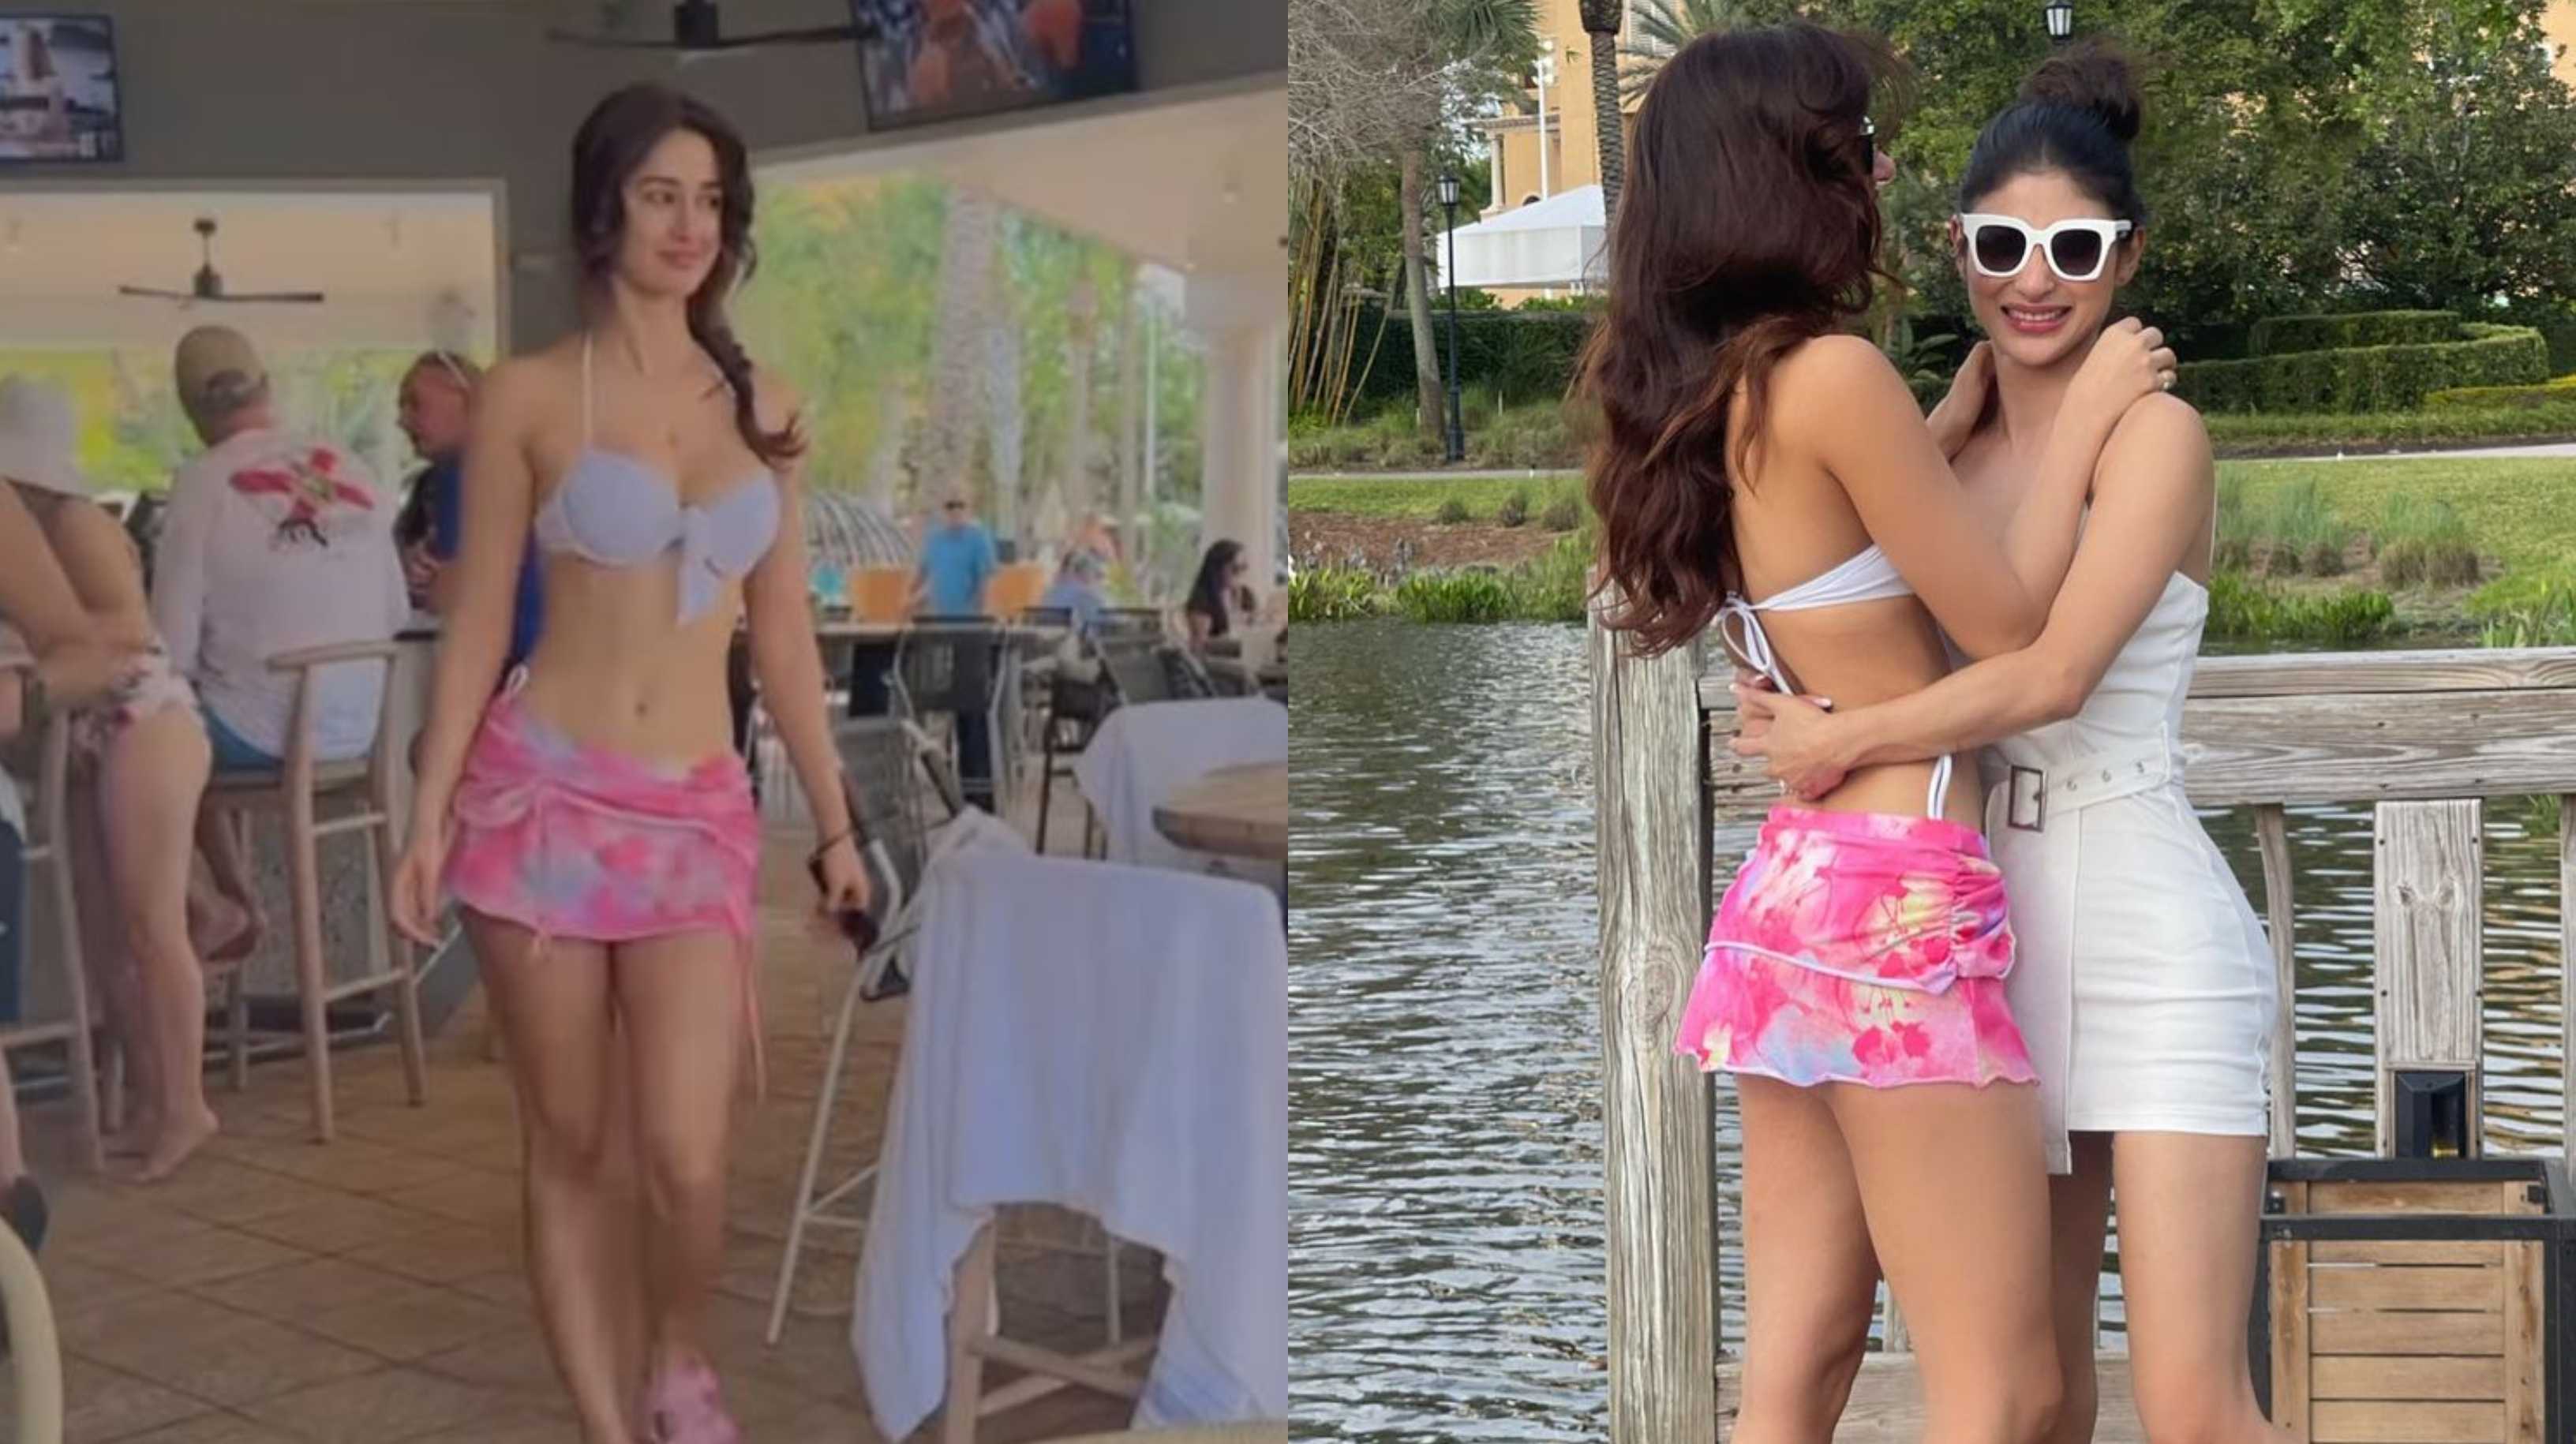 ‘Chotii bacchi ho kya’: Mouni Roy’s video of Disha Patani parading in a bikini gives wings to netizens’ creativity